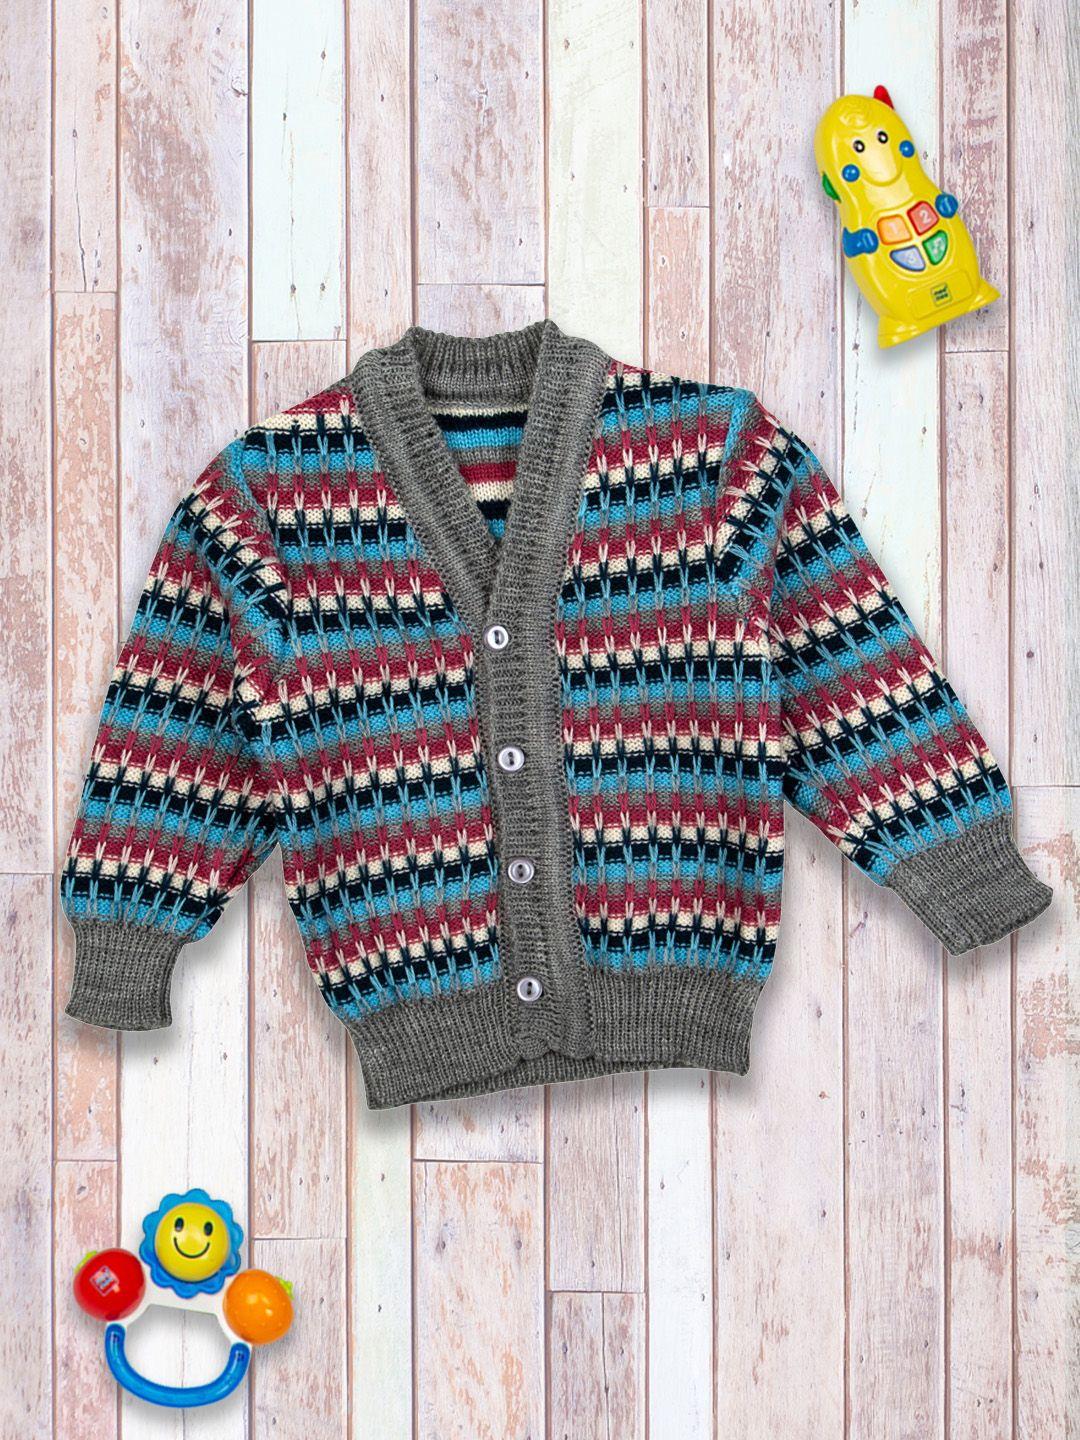 meemee unisex kids grey & blue striped sweater